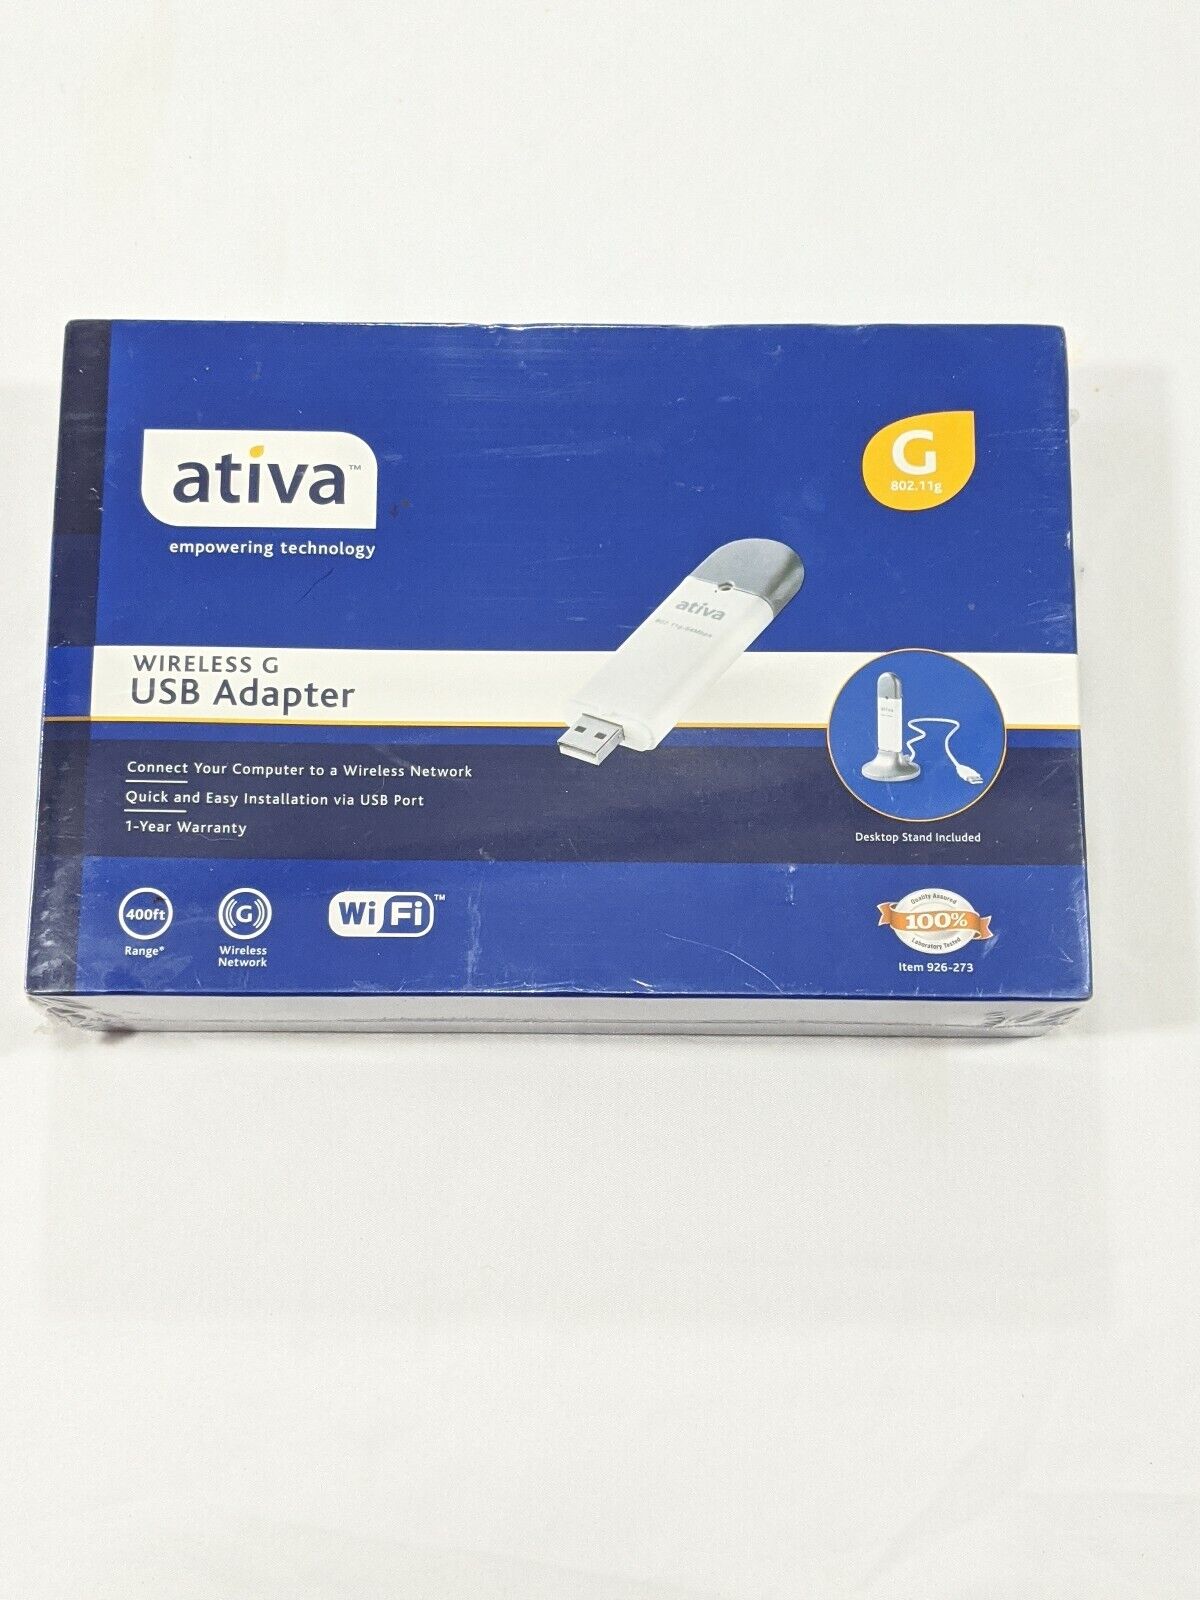 New ATIVA WIRELESS G USB ADAPTER Model AWGUA54 802.11 b/g Wi-Fi 54Mbps 400 Feet